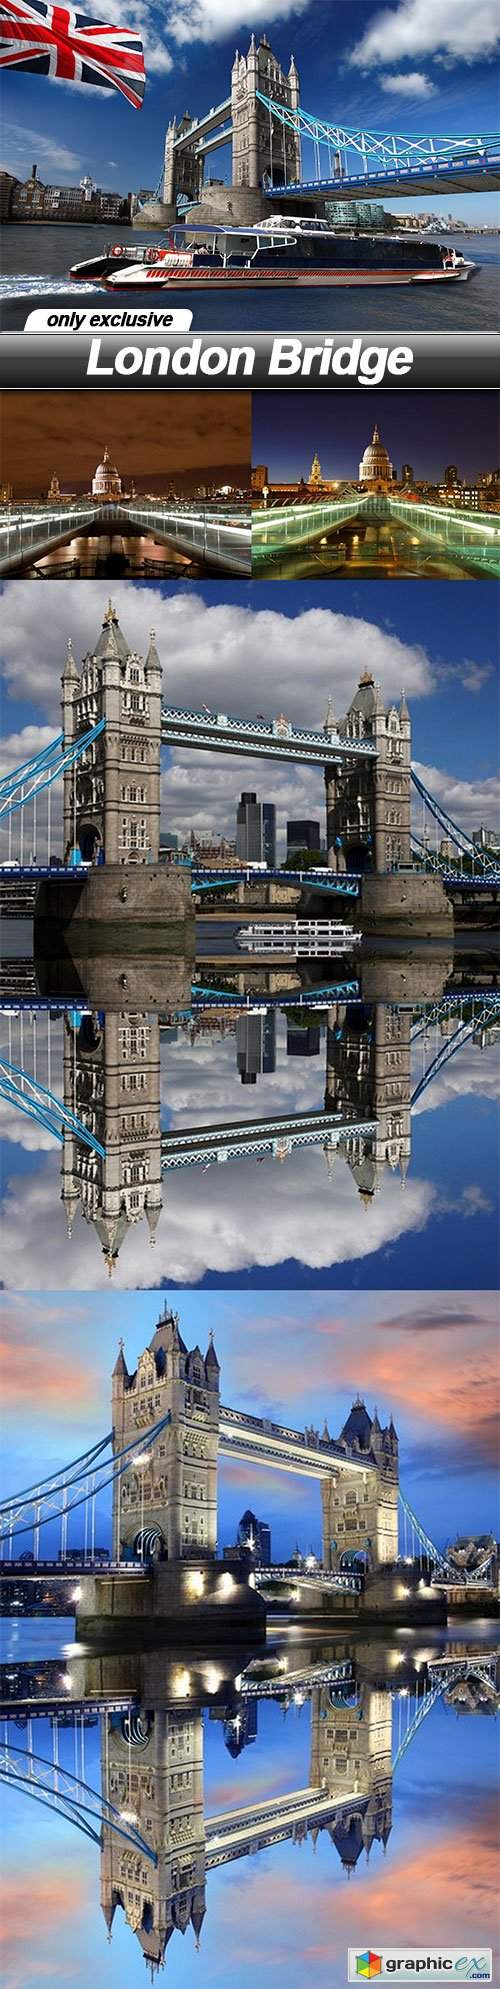  London Bridge - 5 UHQ JPEG 